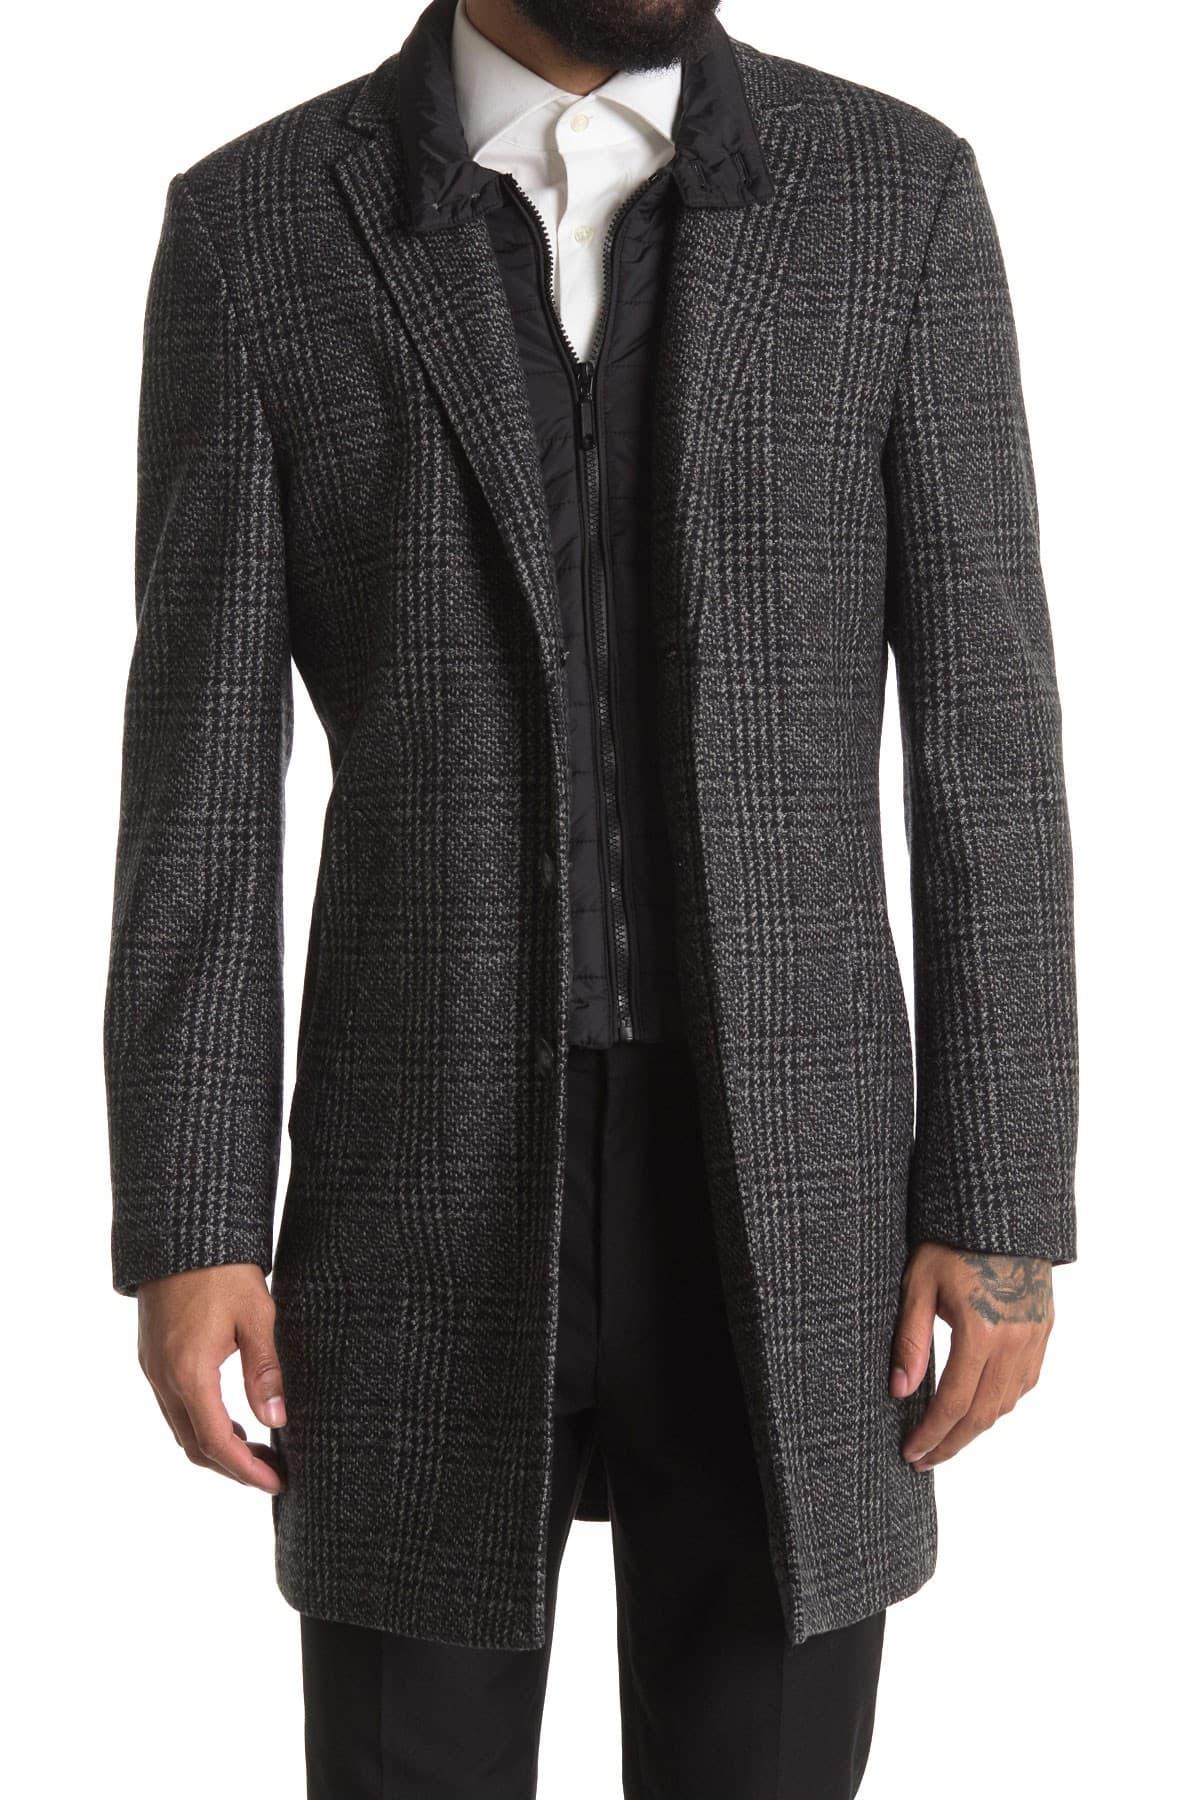 English Laundry Wool Bib Overcoat in Black for Men - Lyst